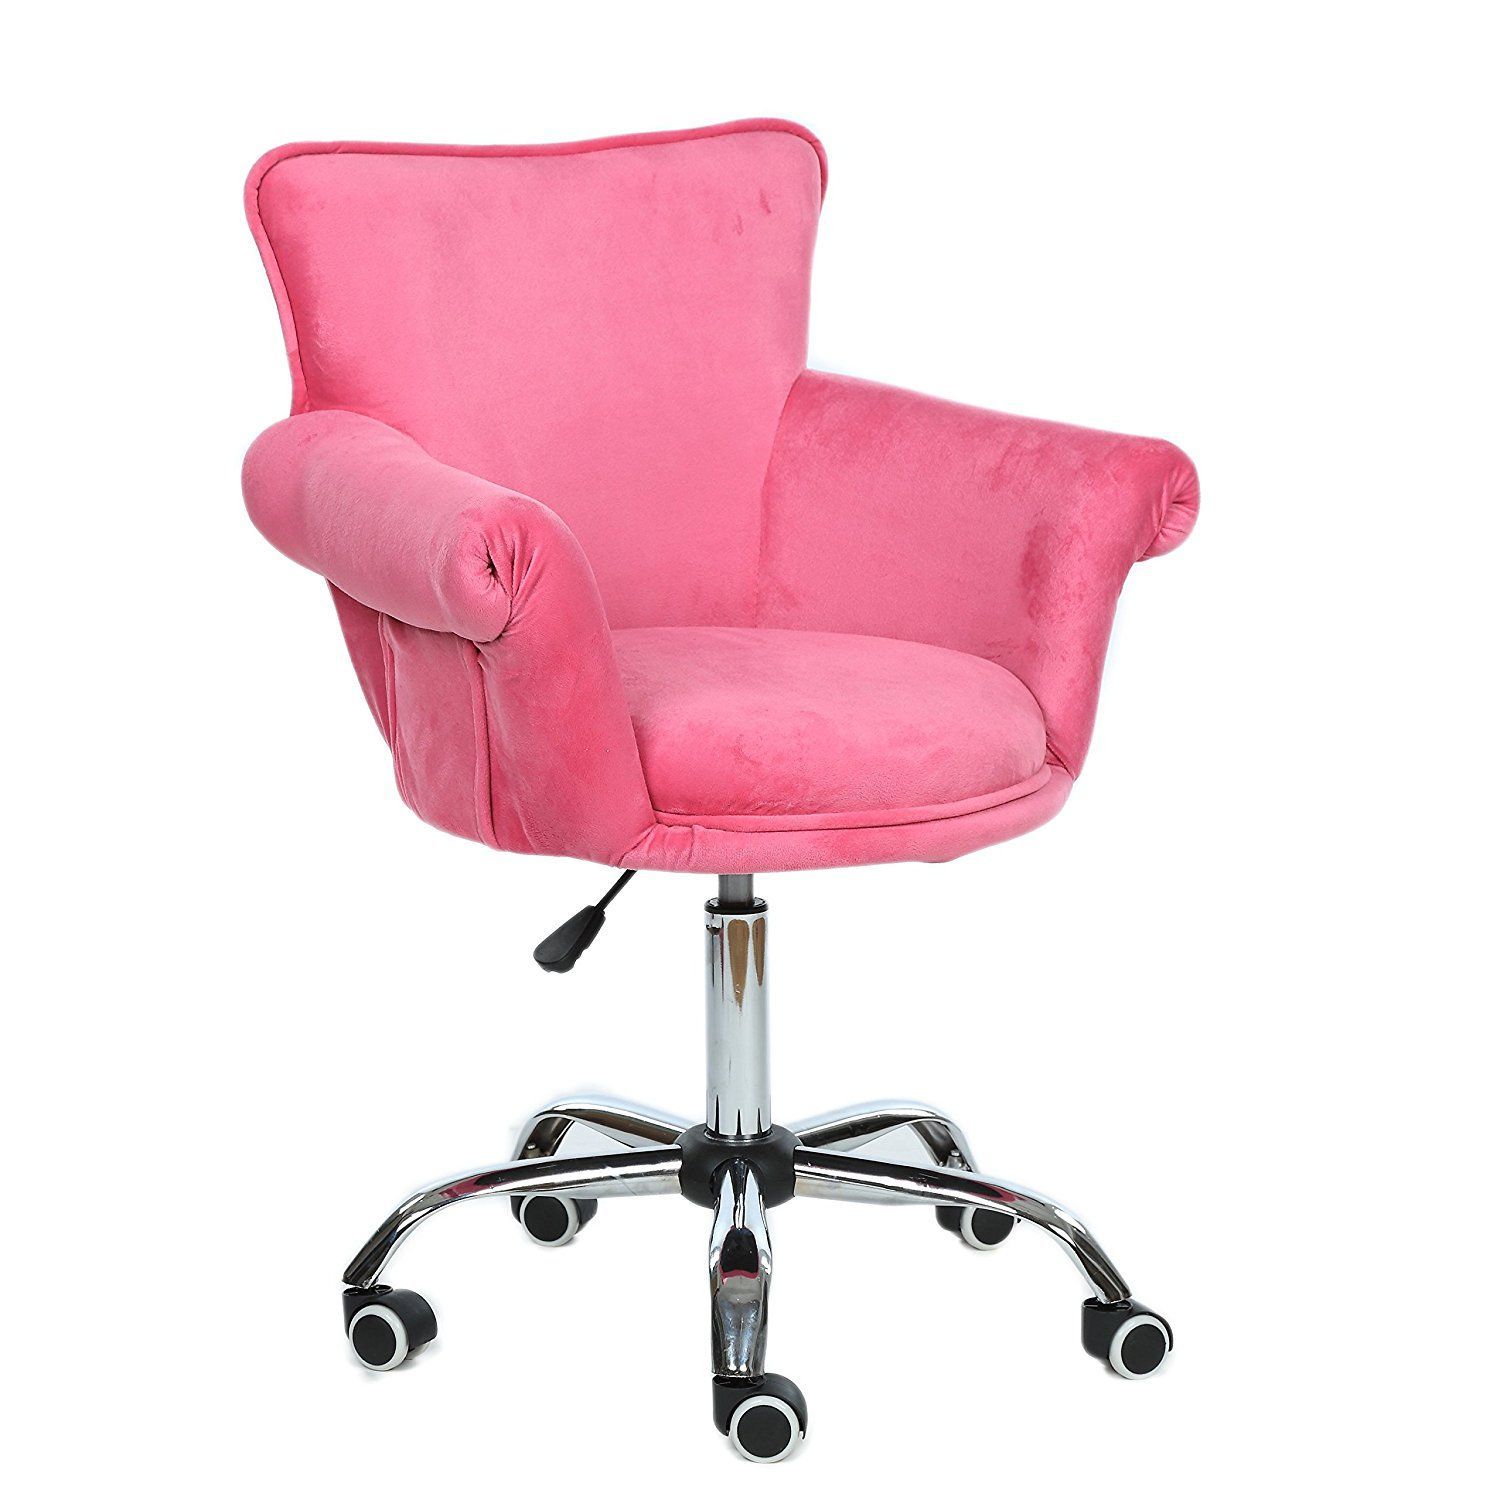 Magshion Deluxe Microfiber Office Desk Chair Bar stool Beauty Nail Salon Spa Vanity Seat Pink -   19 beauty Design salon ideas